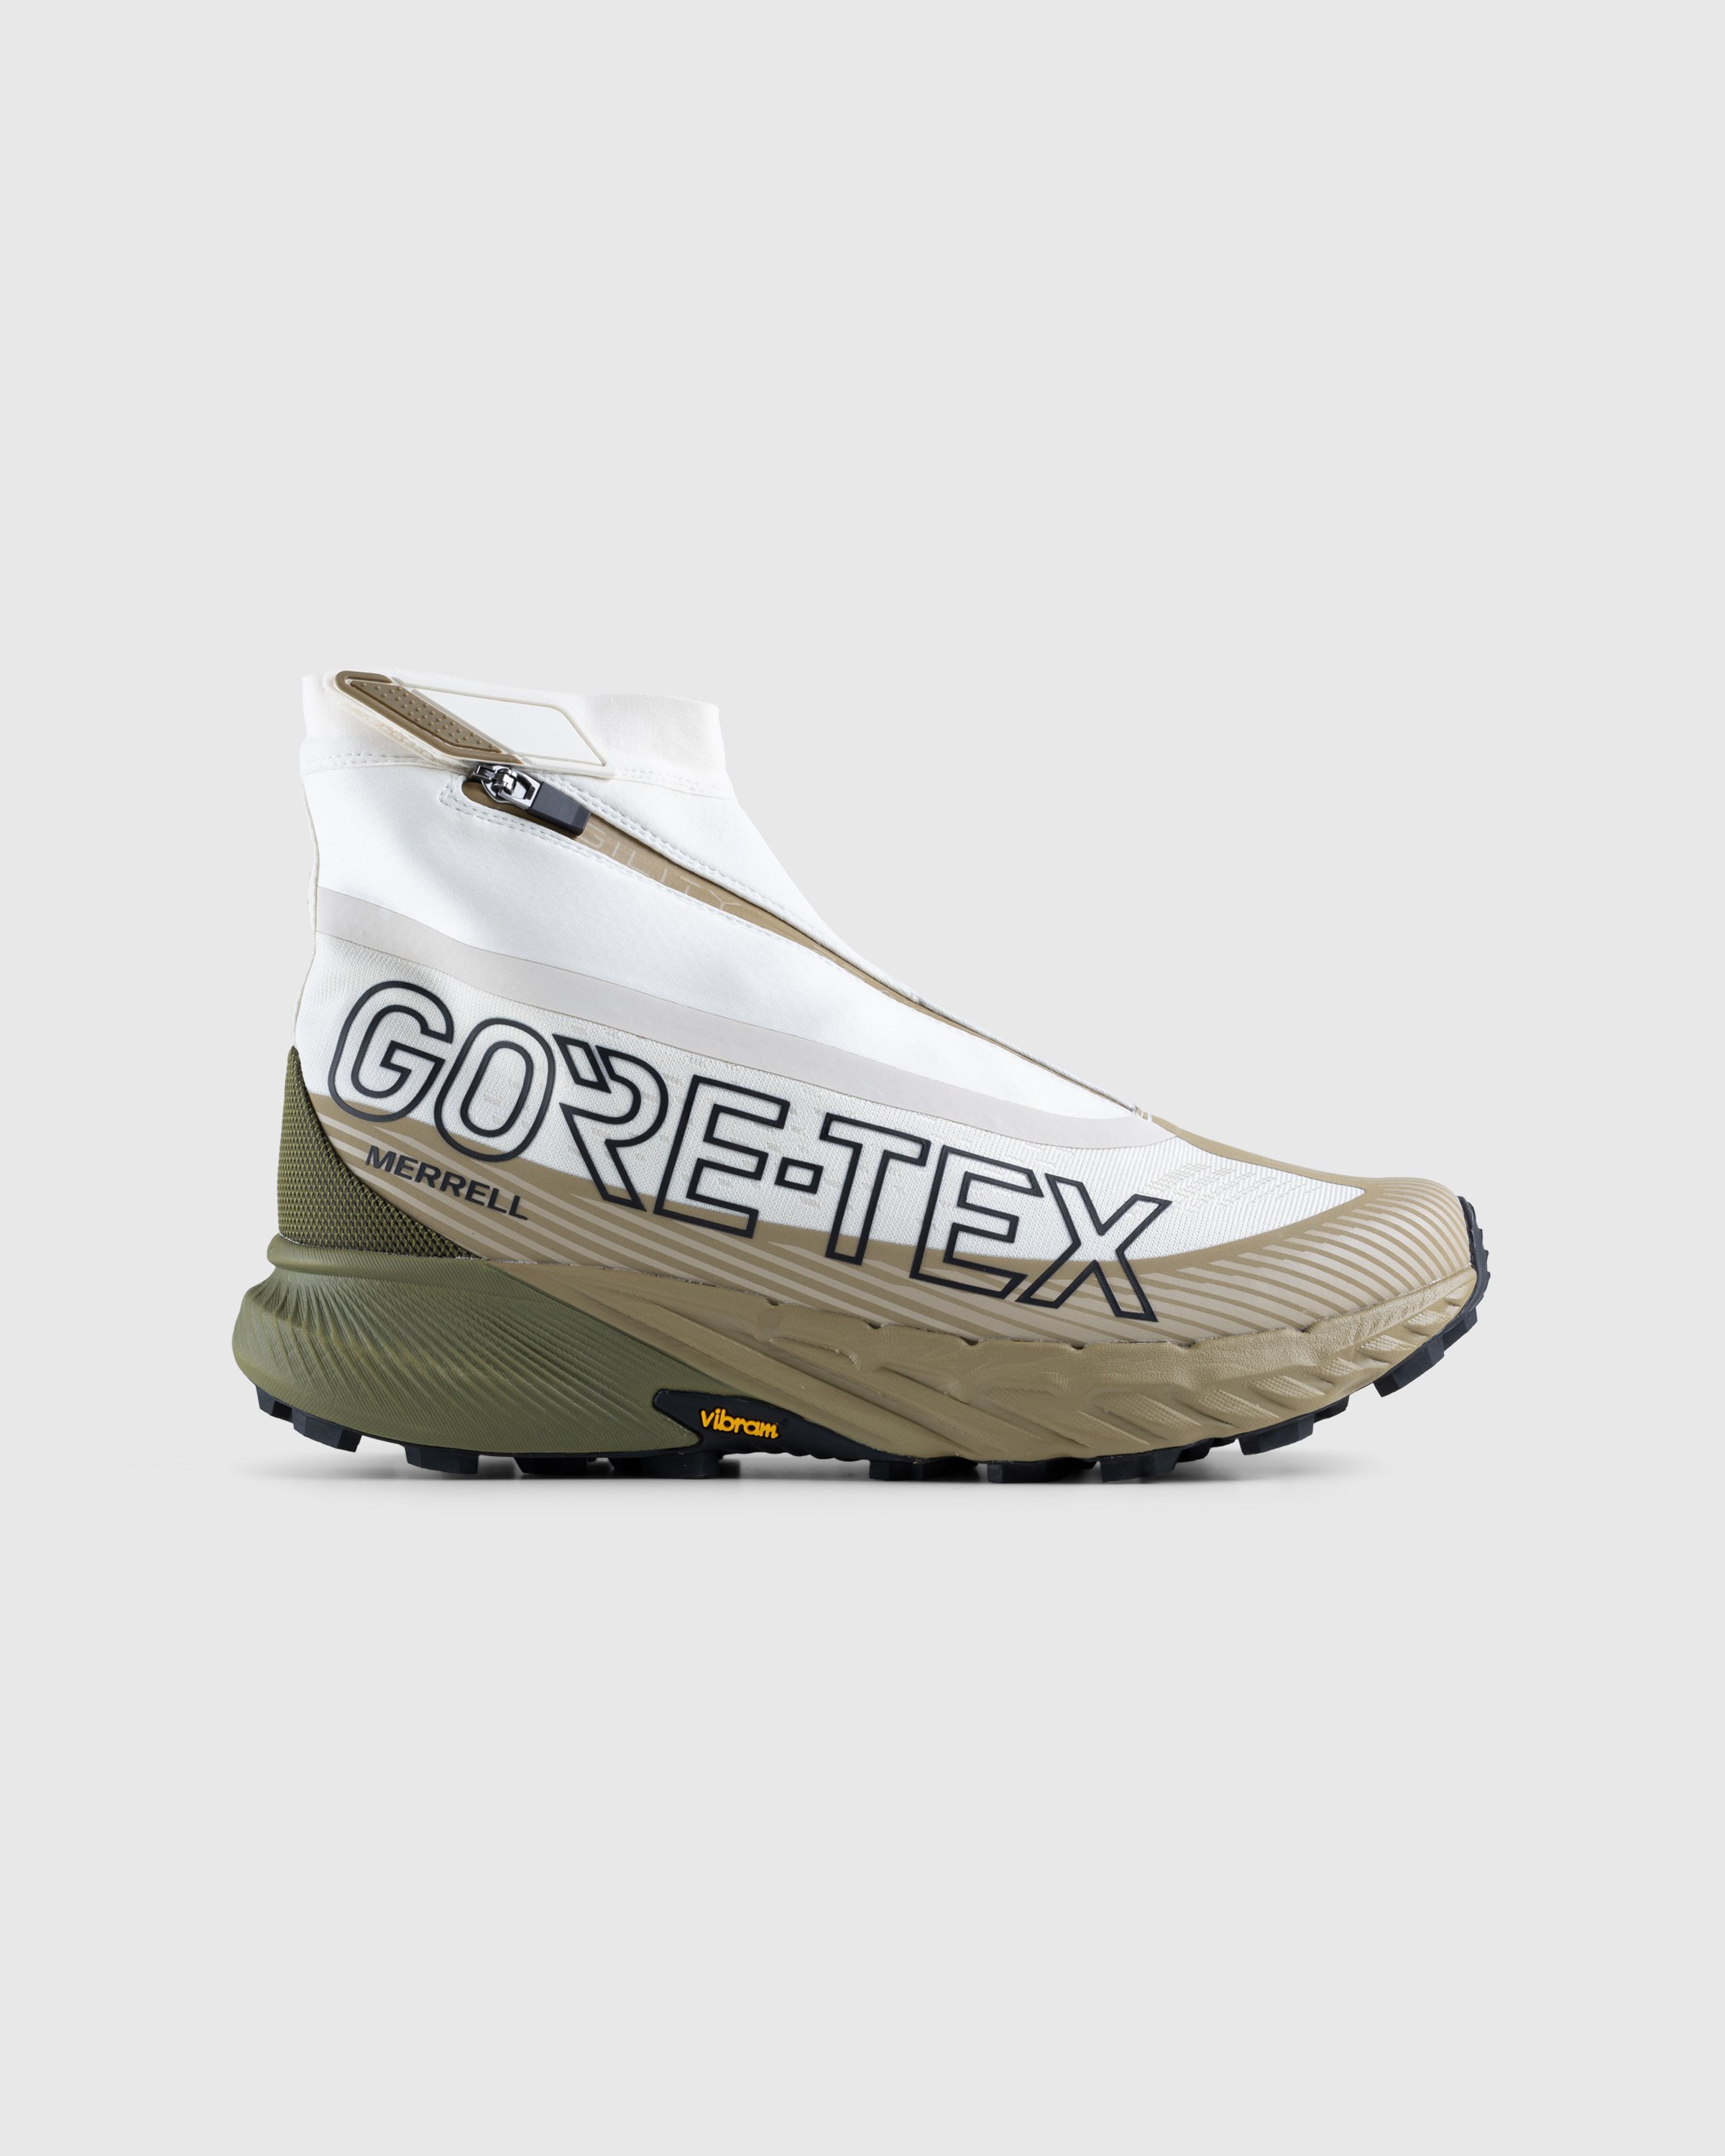 Merrell - Agility Peak 5 Zero GORE-TEX White/Coyote - Footwear - Multi - Image 1